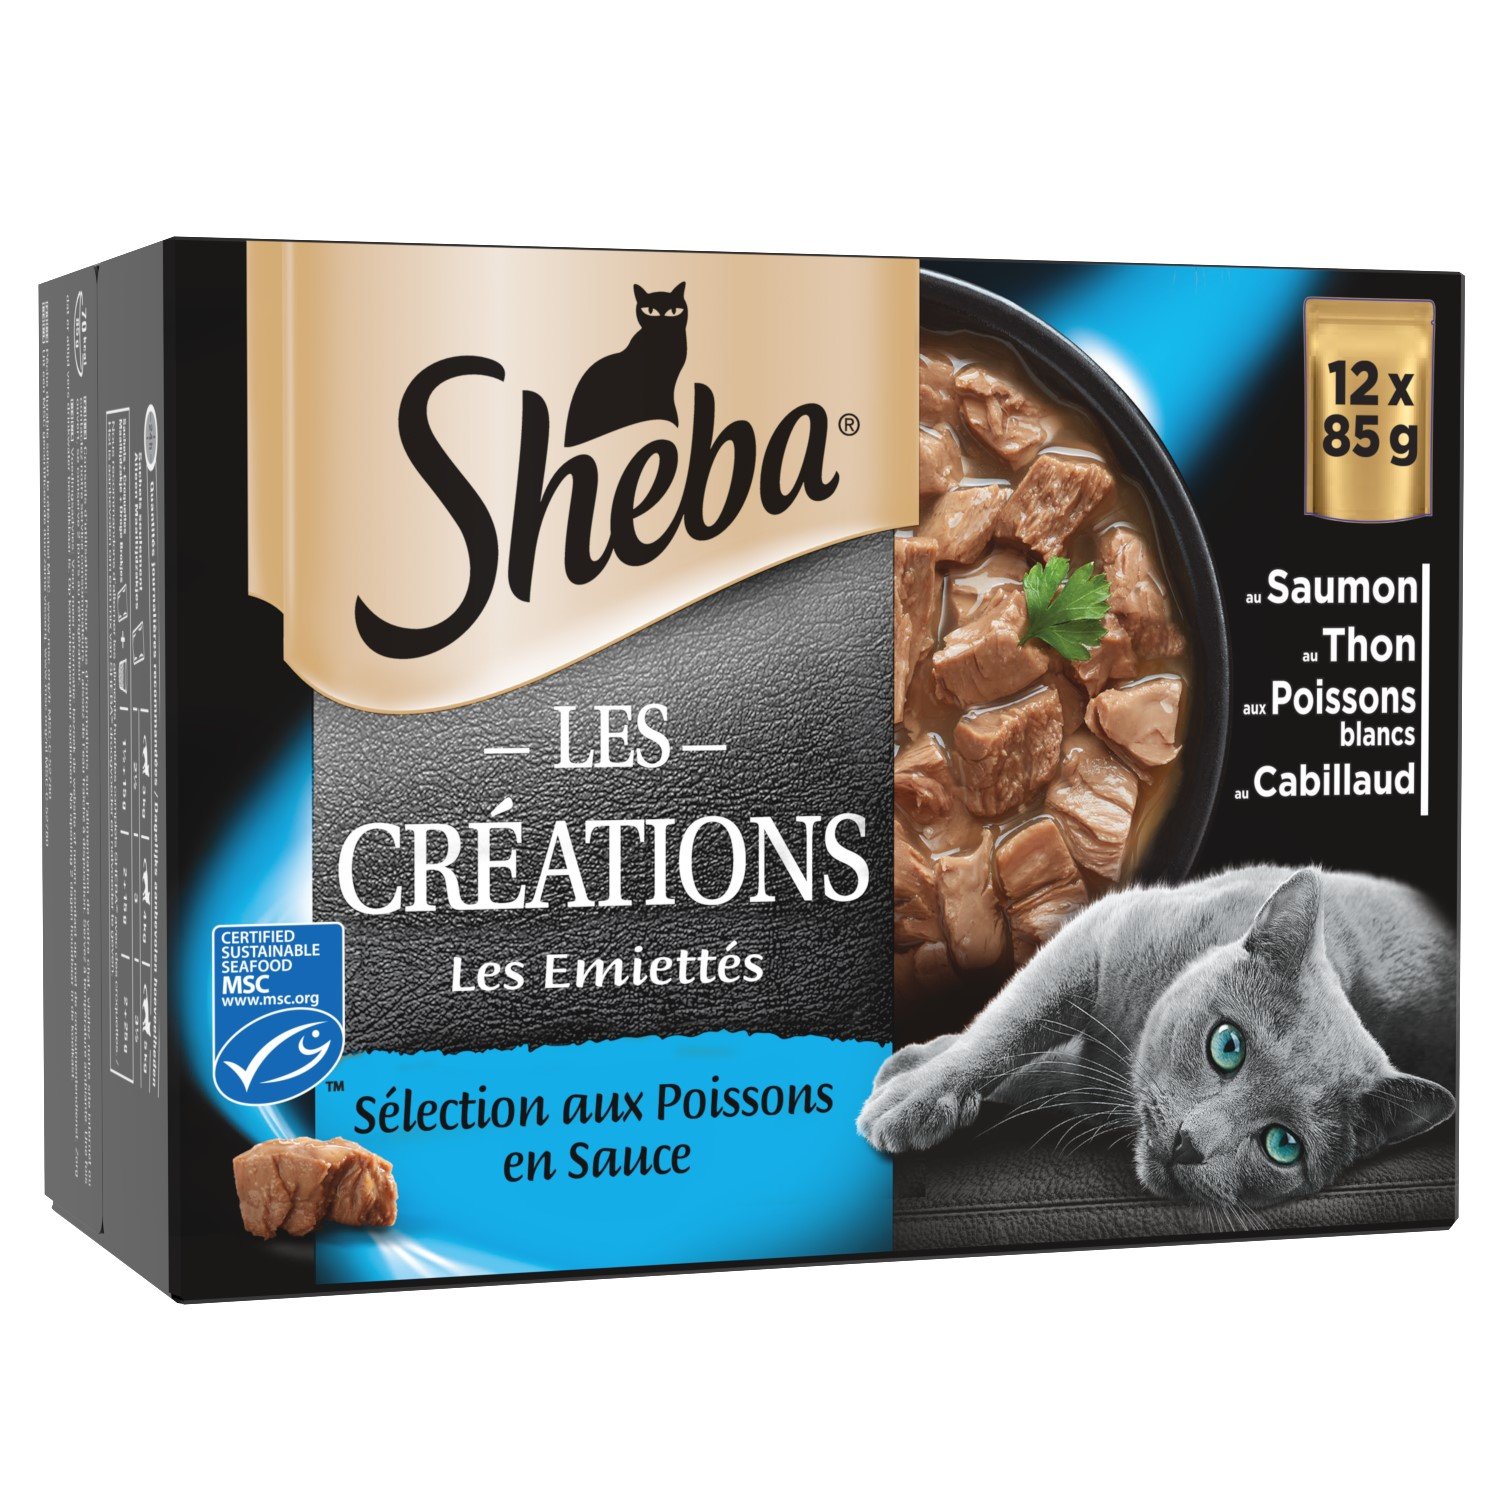 SHEBA Craft Collection Fischplatte Nassfutter für Katzen